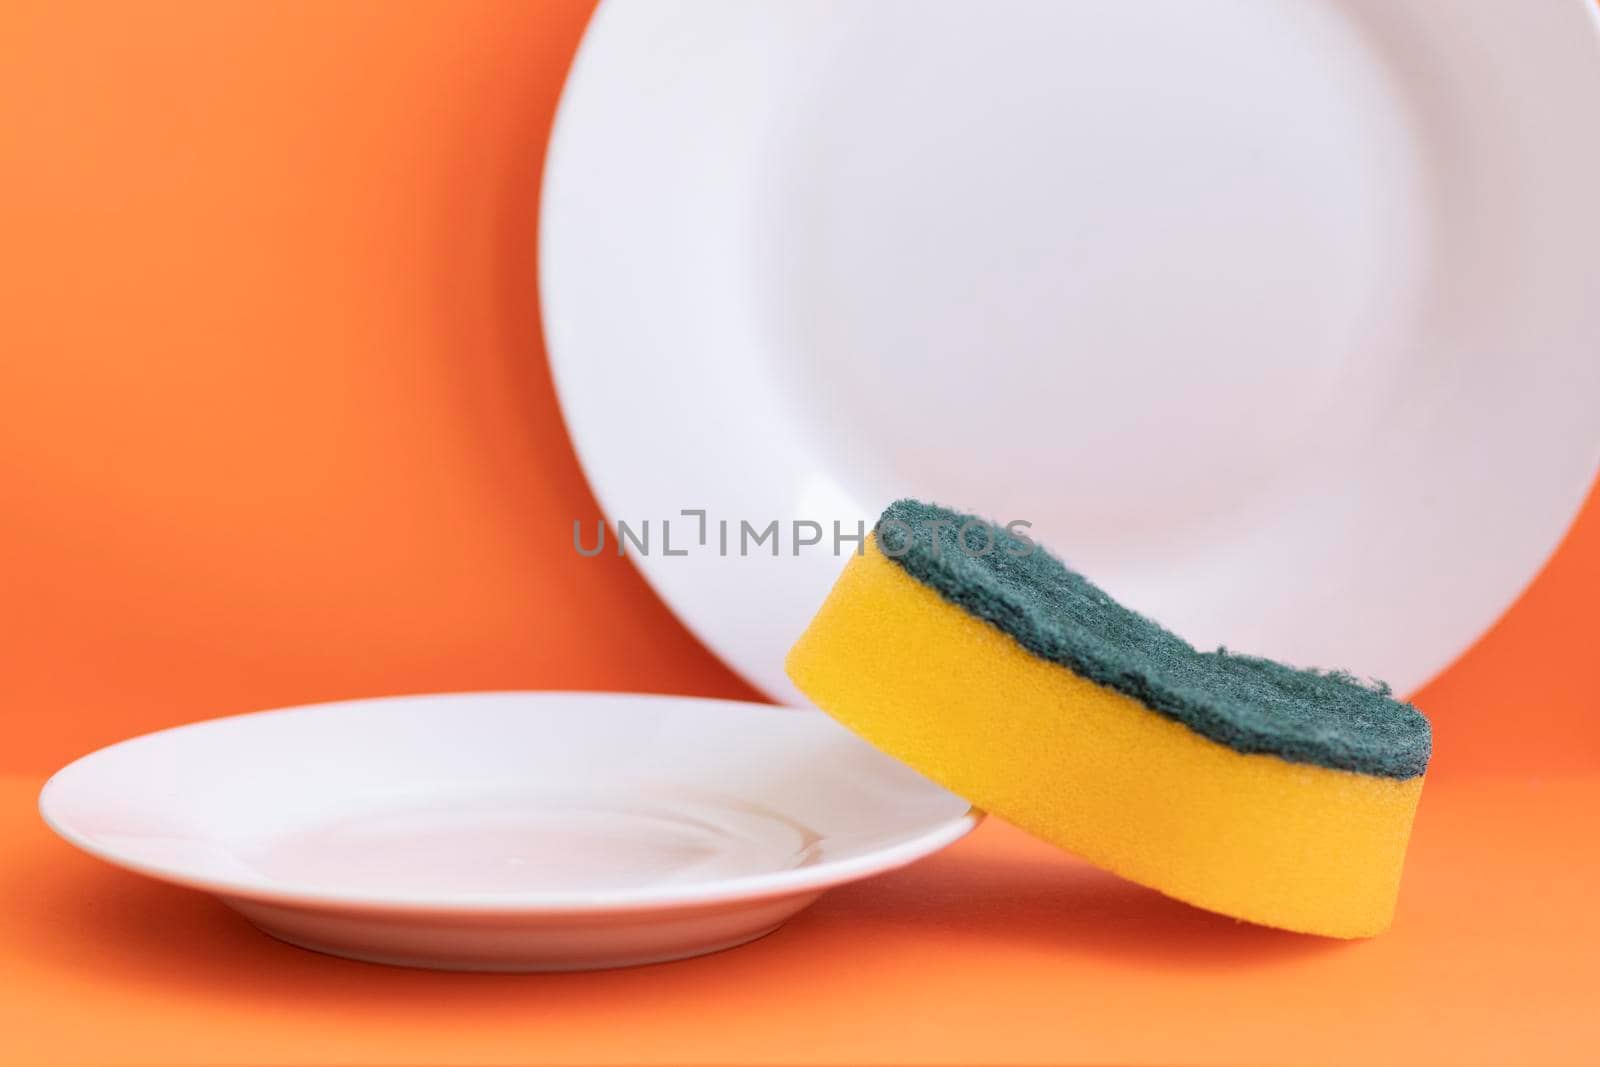 Yellow sponge next to white plate with orange background